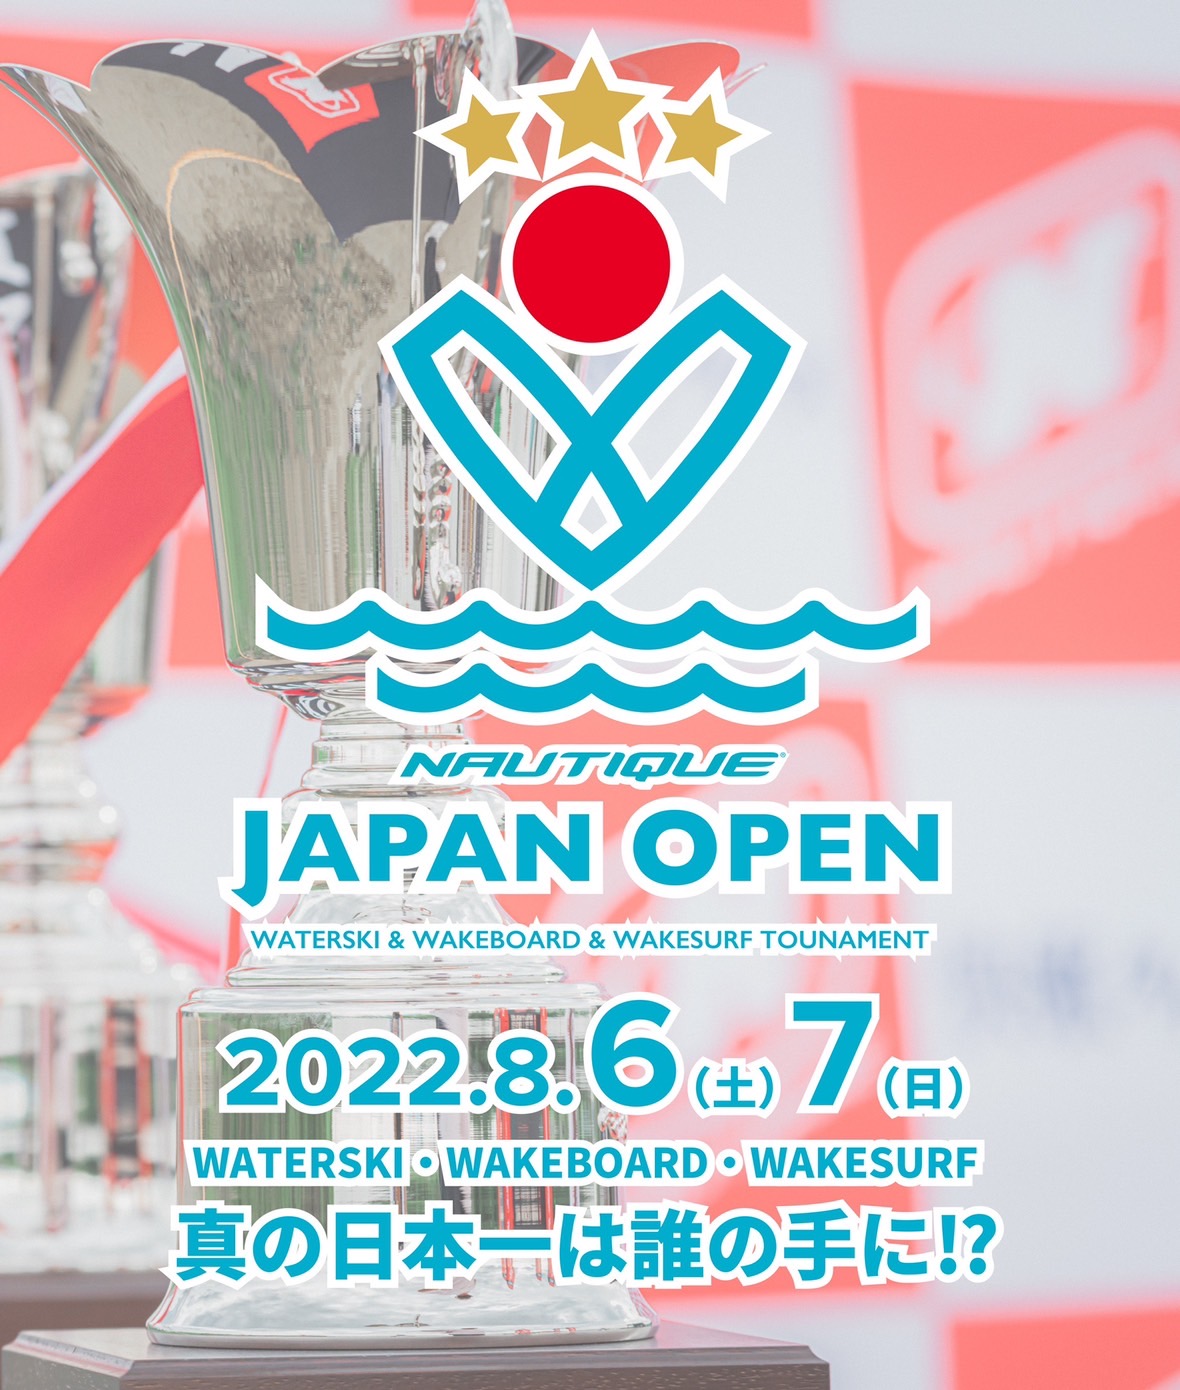 DAY2 NAUTIQUE JAPAN OPEN 2022 ！！